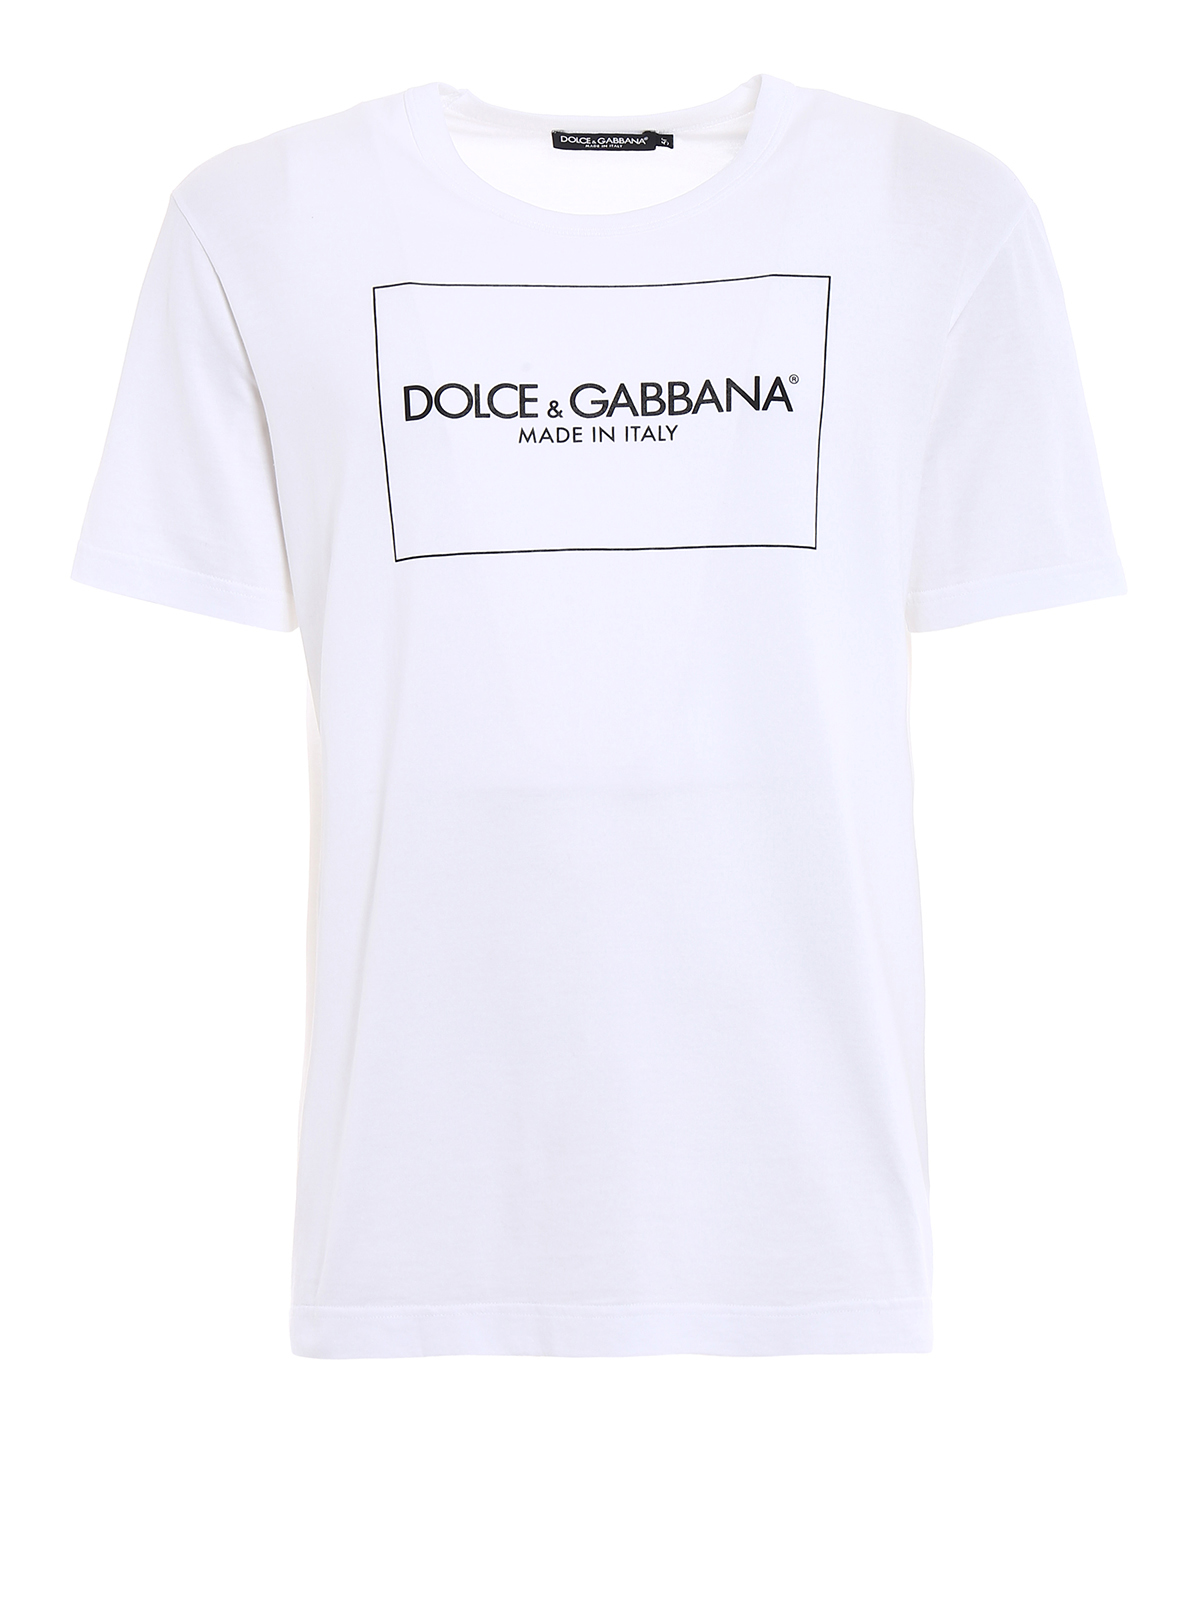 Exclusiva Polera Dolce Gabbana Made In Italy Poleras eleven-blog.com